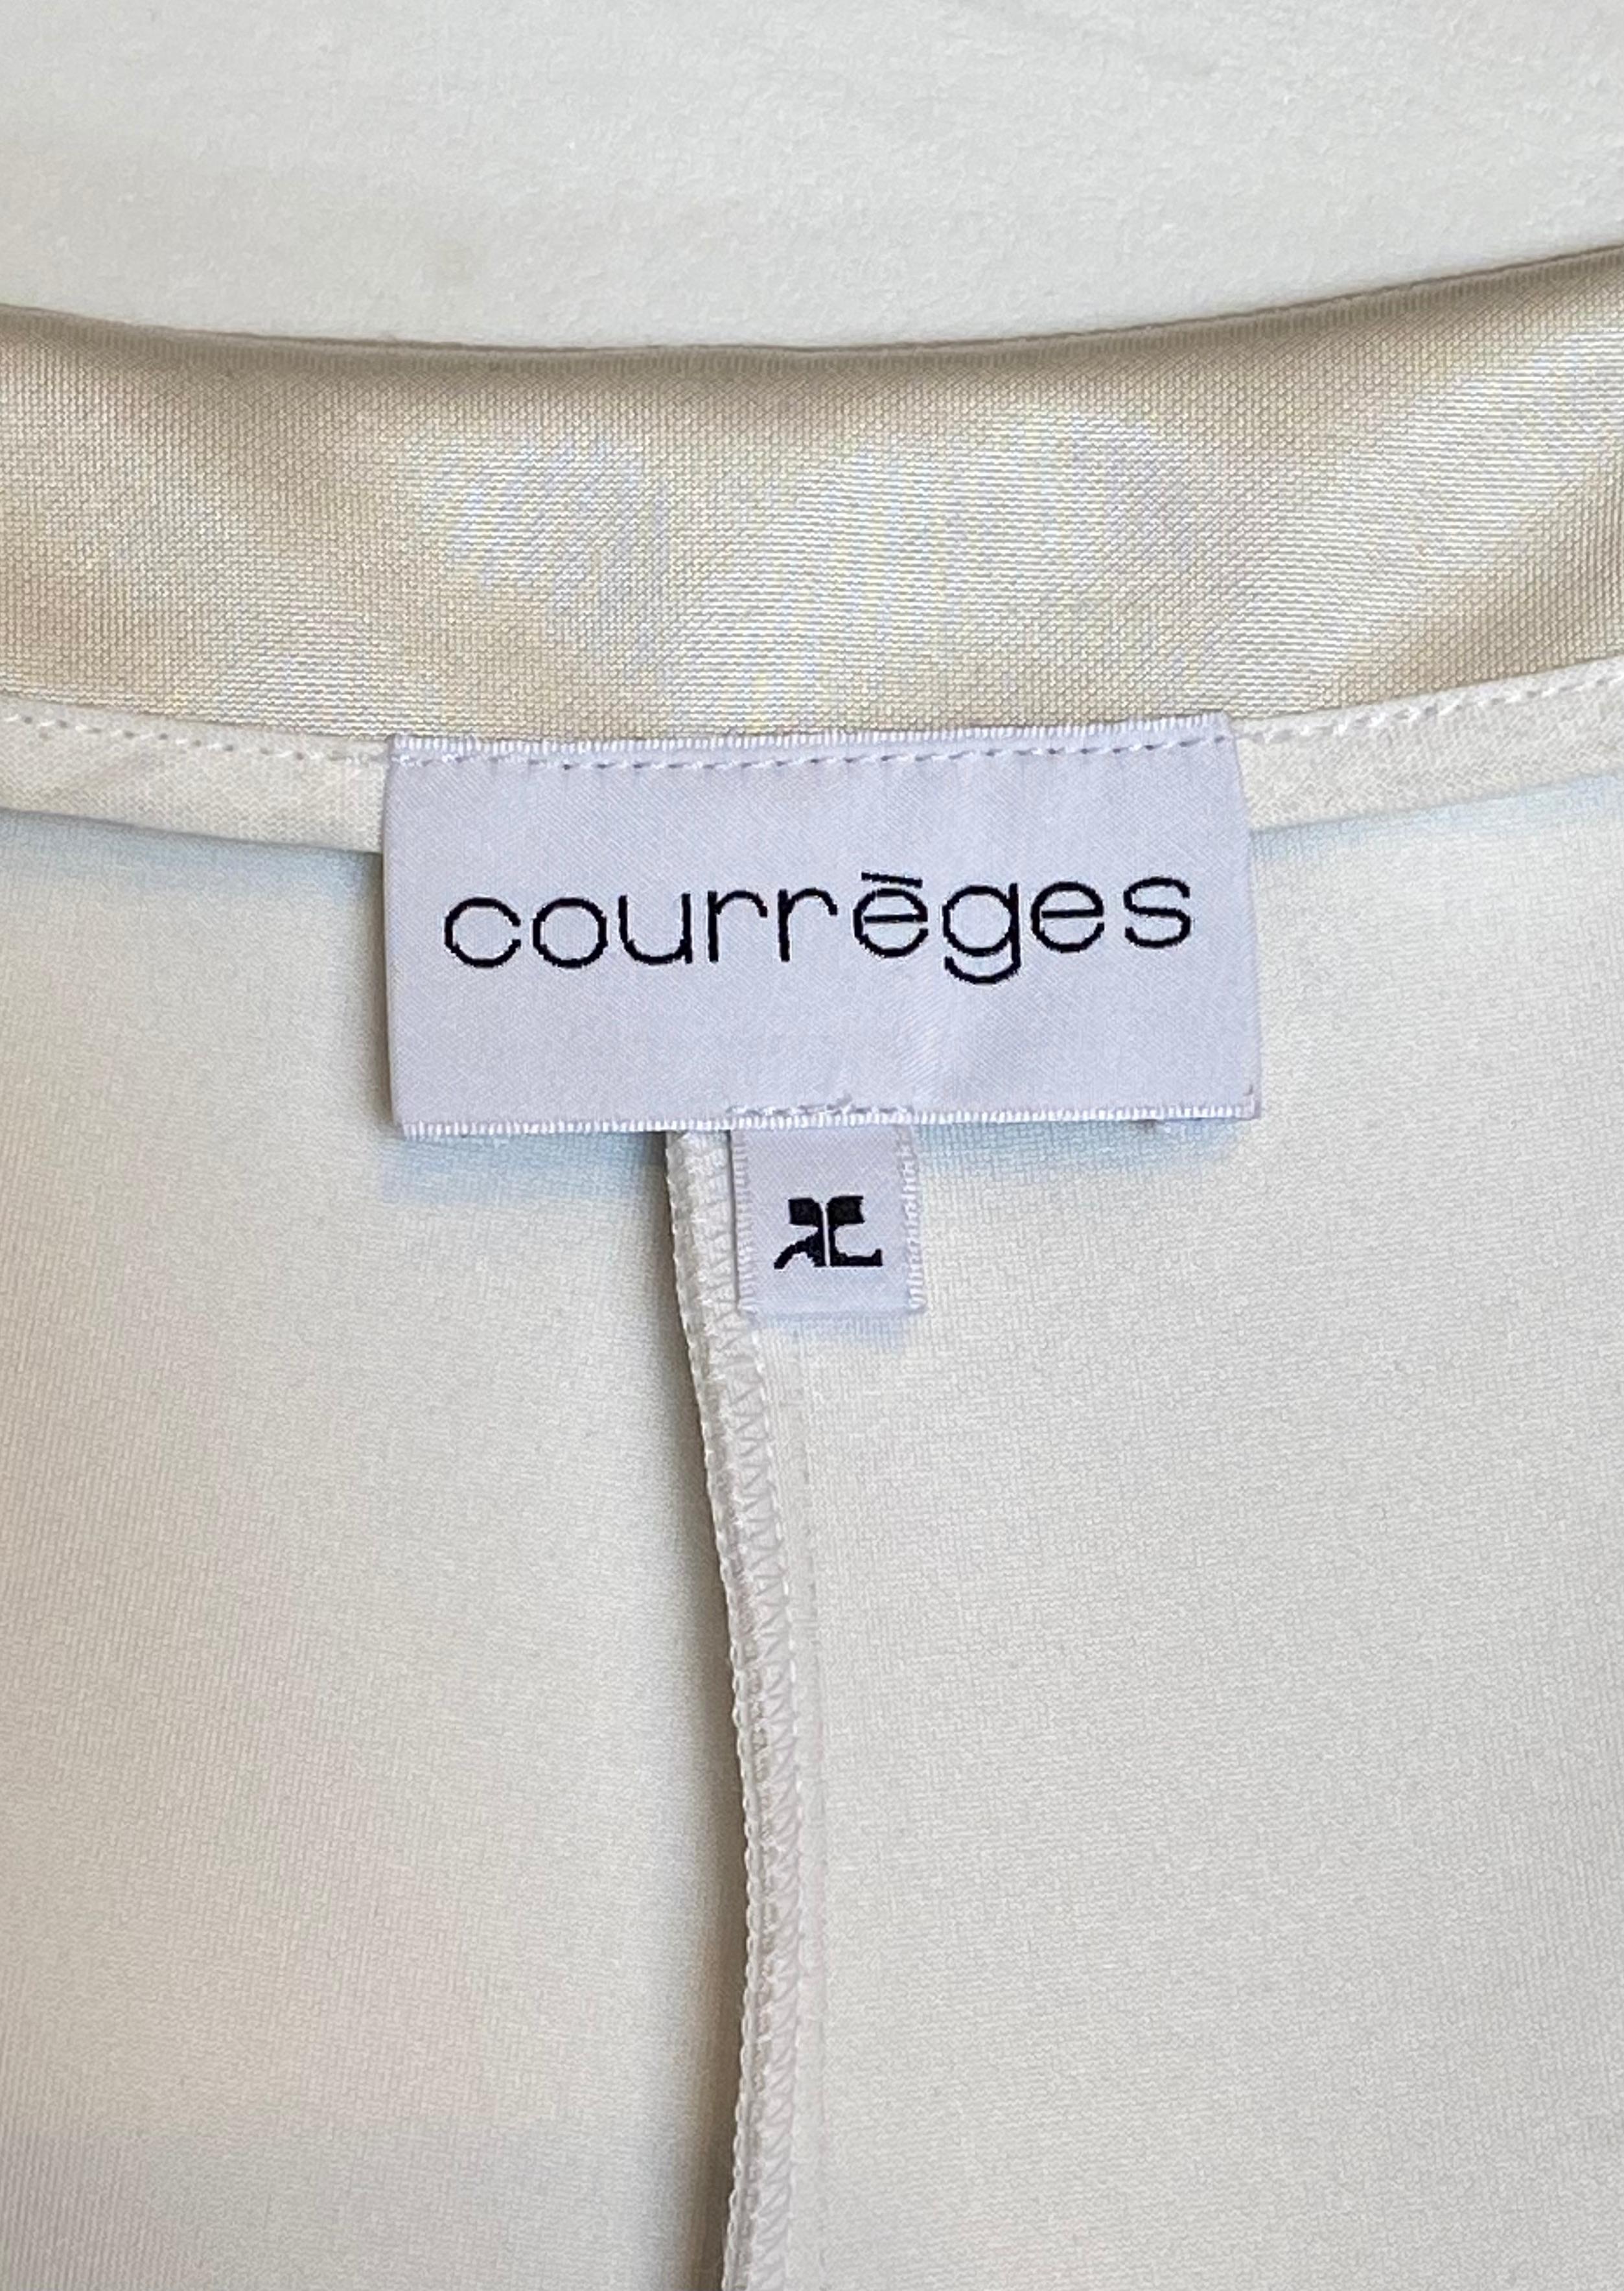 Correges Classique Jersey Neoprene In New Condition For Sale In Laguna Beach, CA